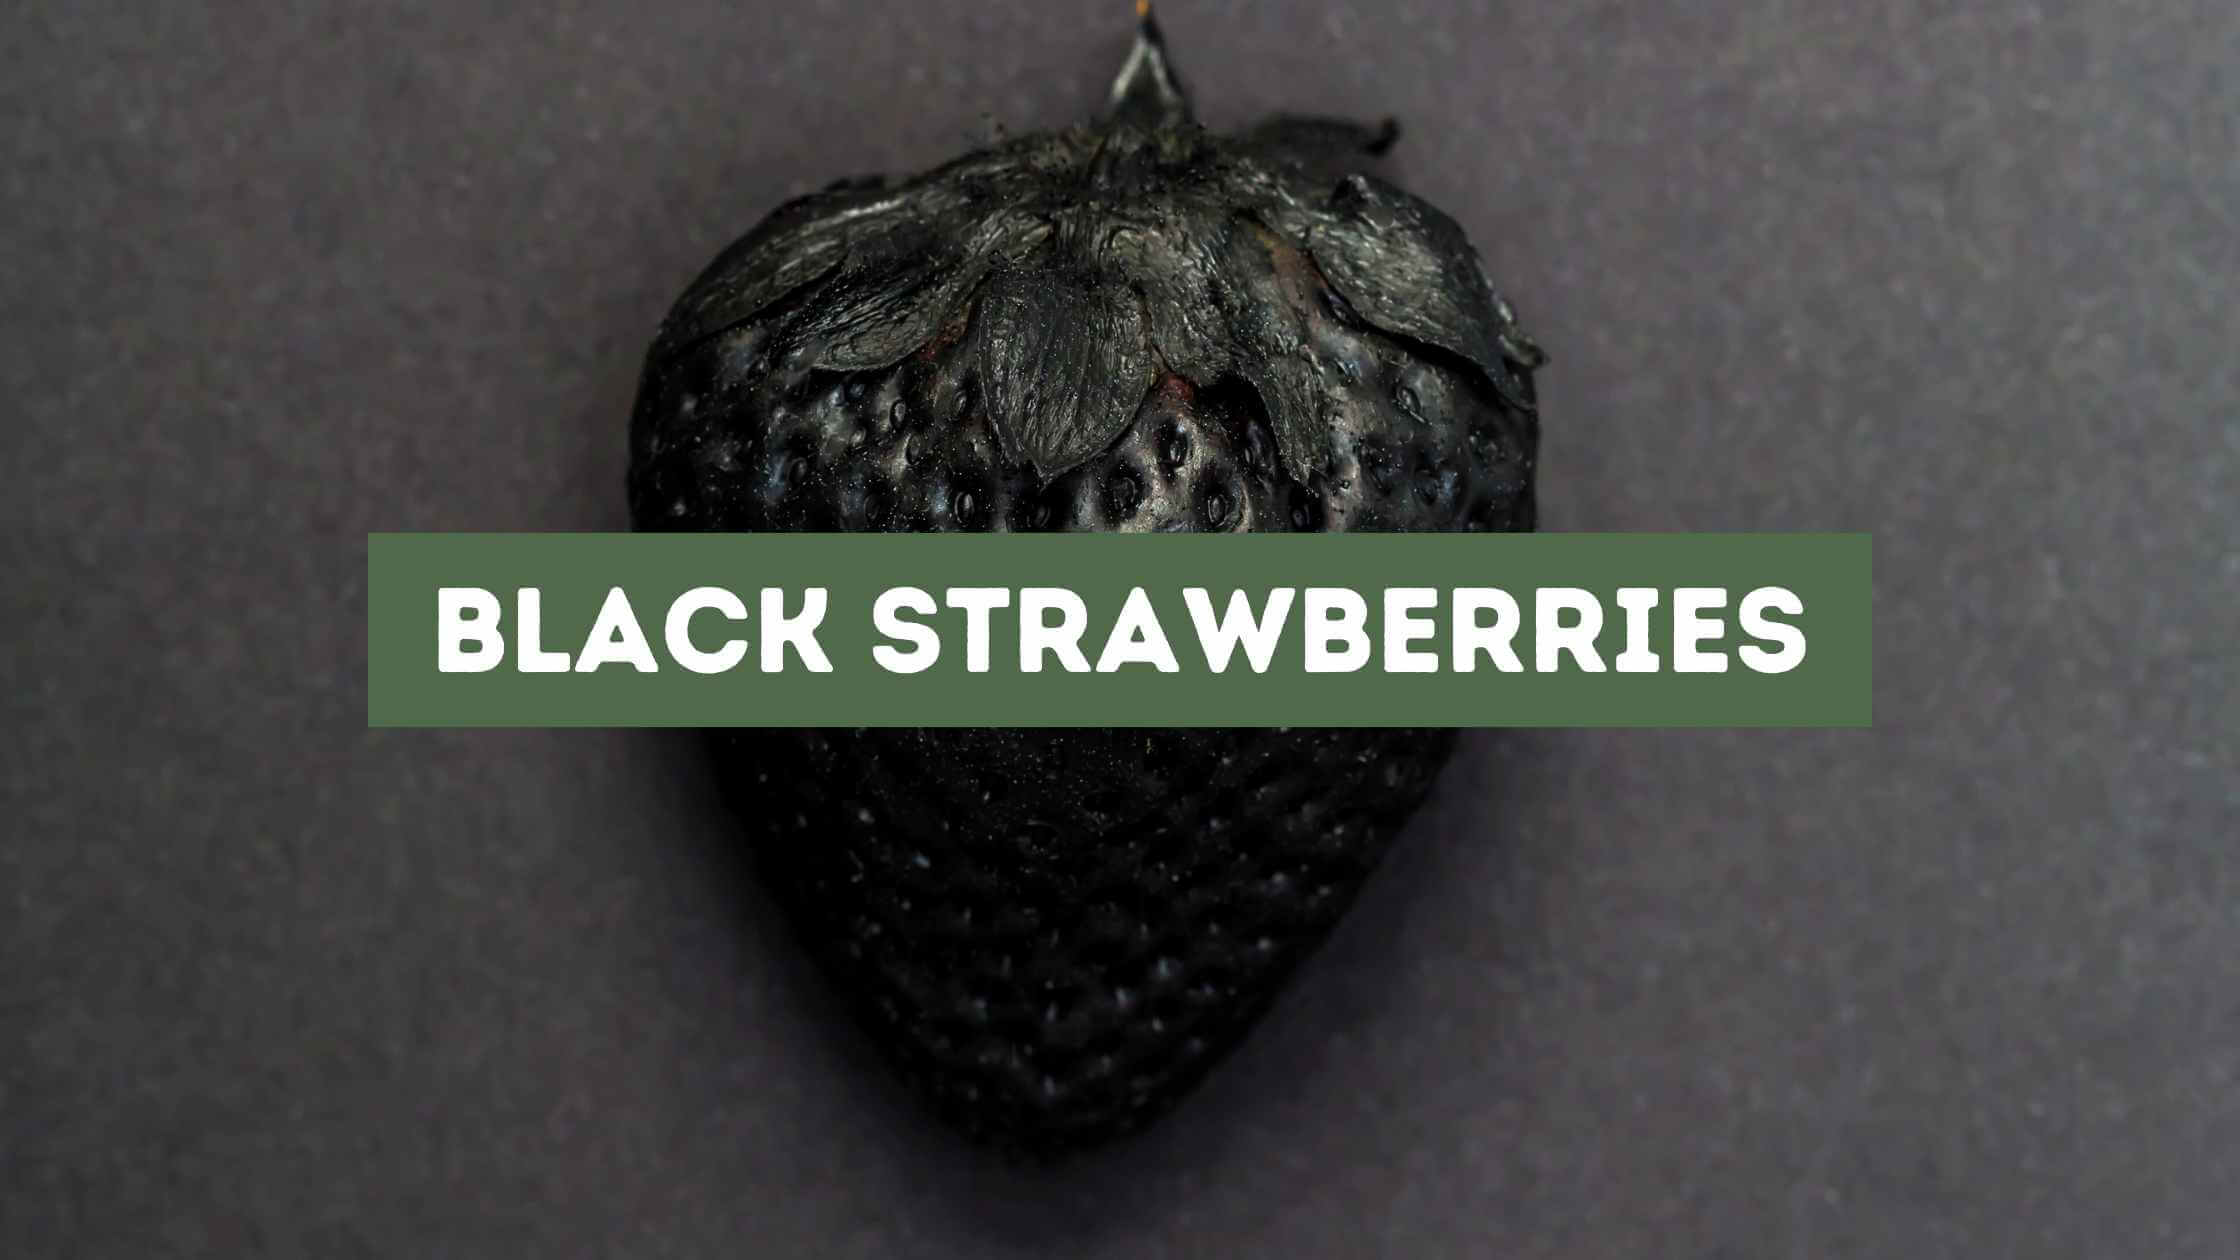 Black strawberries